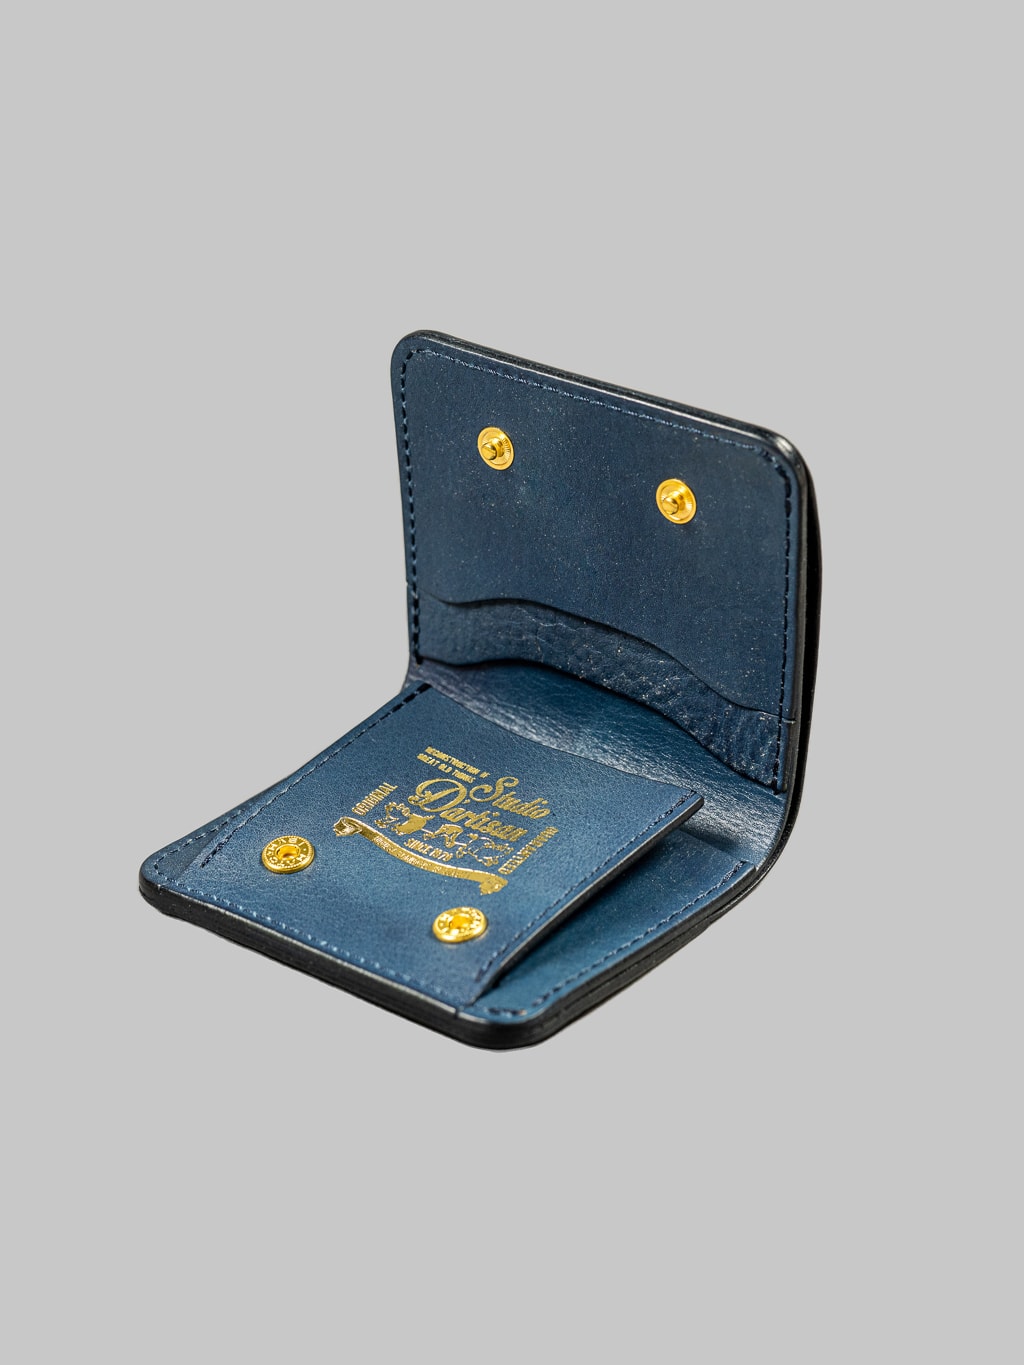 Studio Dartisan indigo leather compartment details